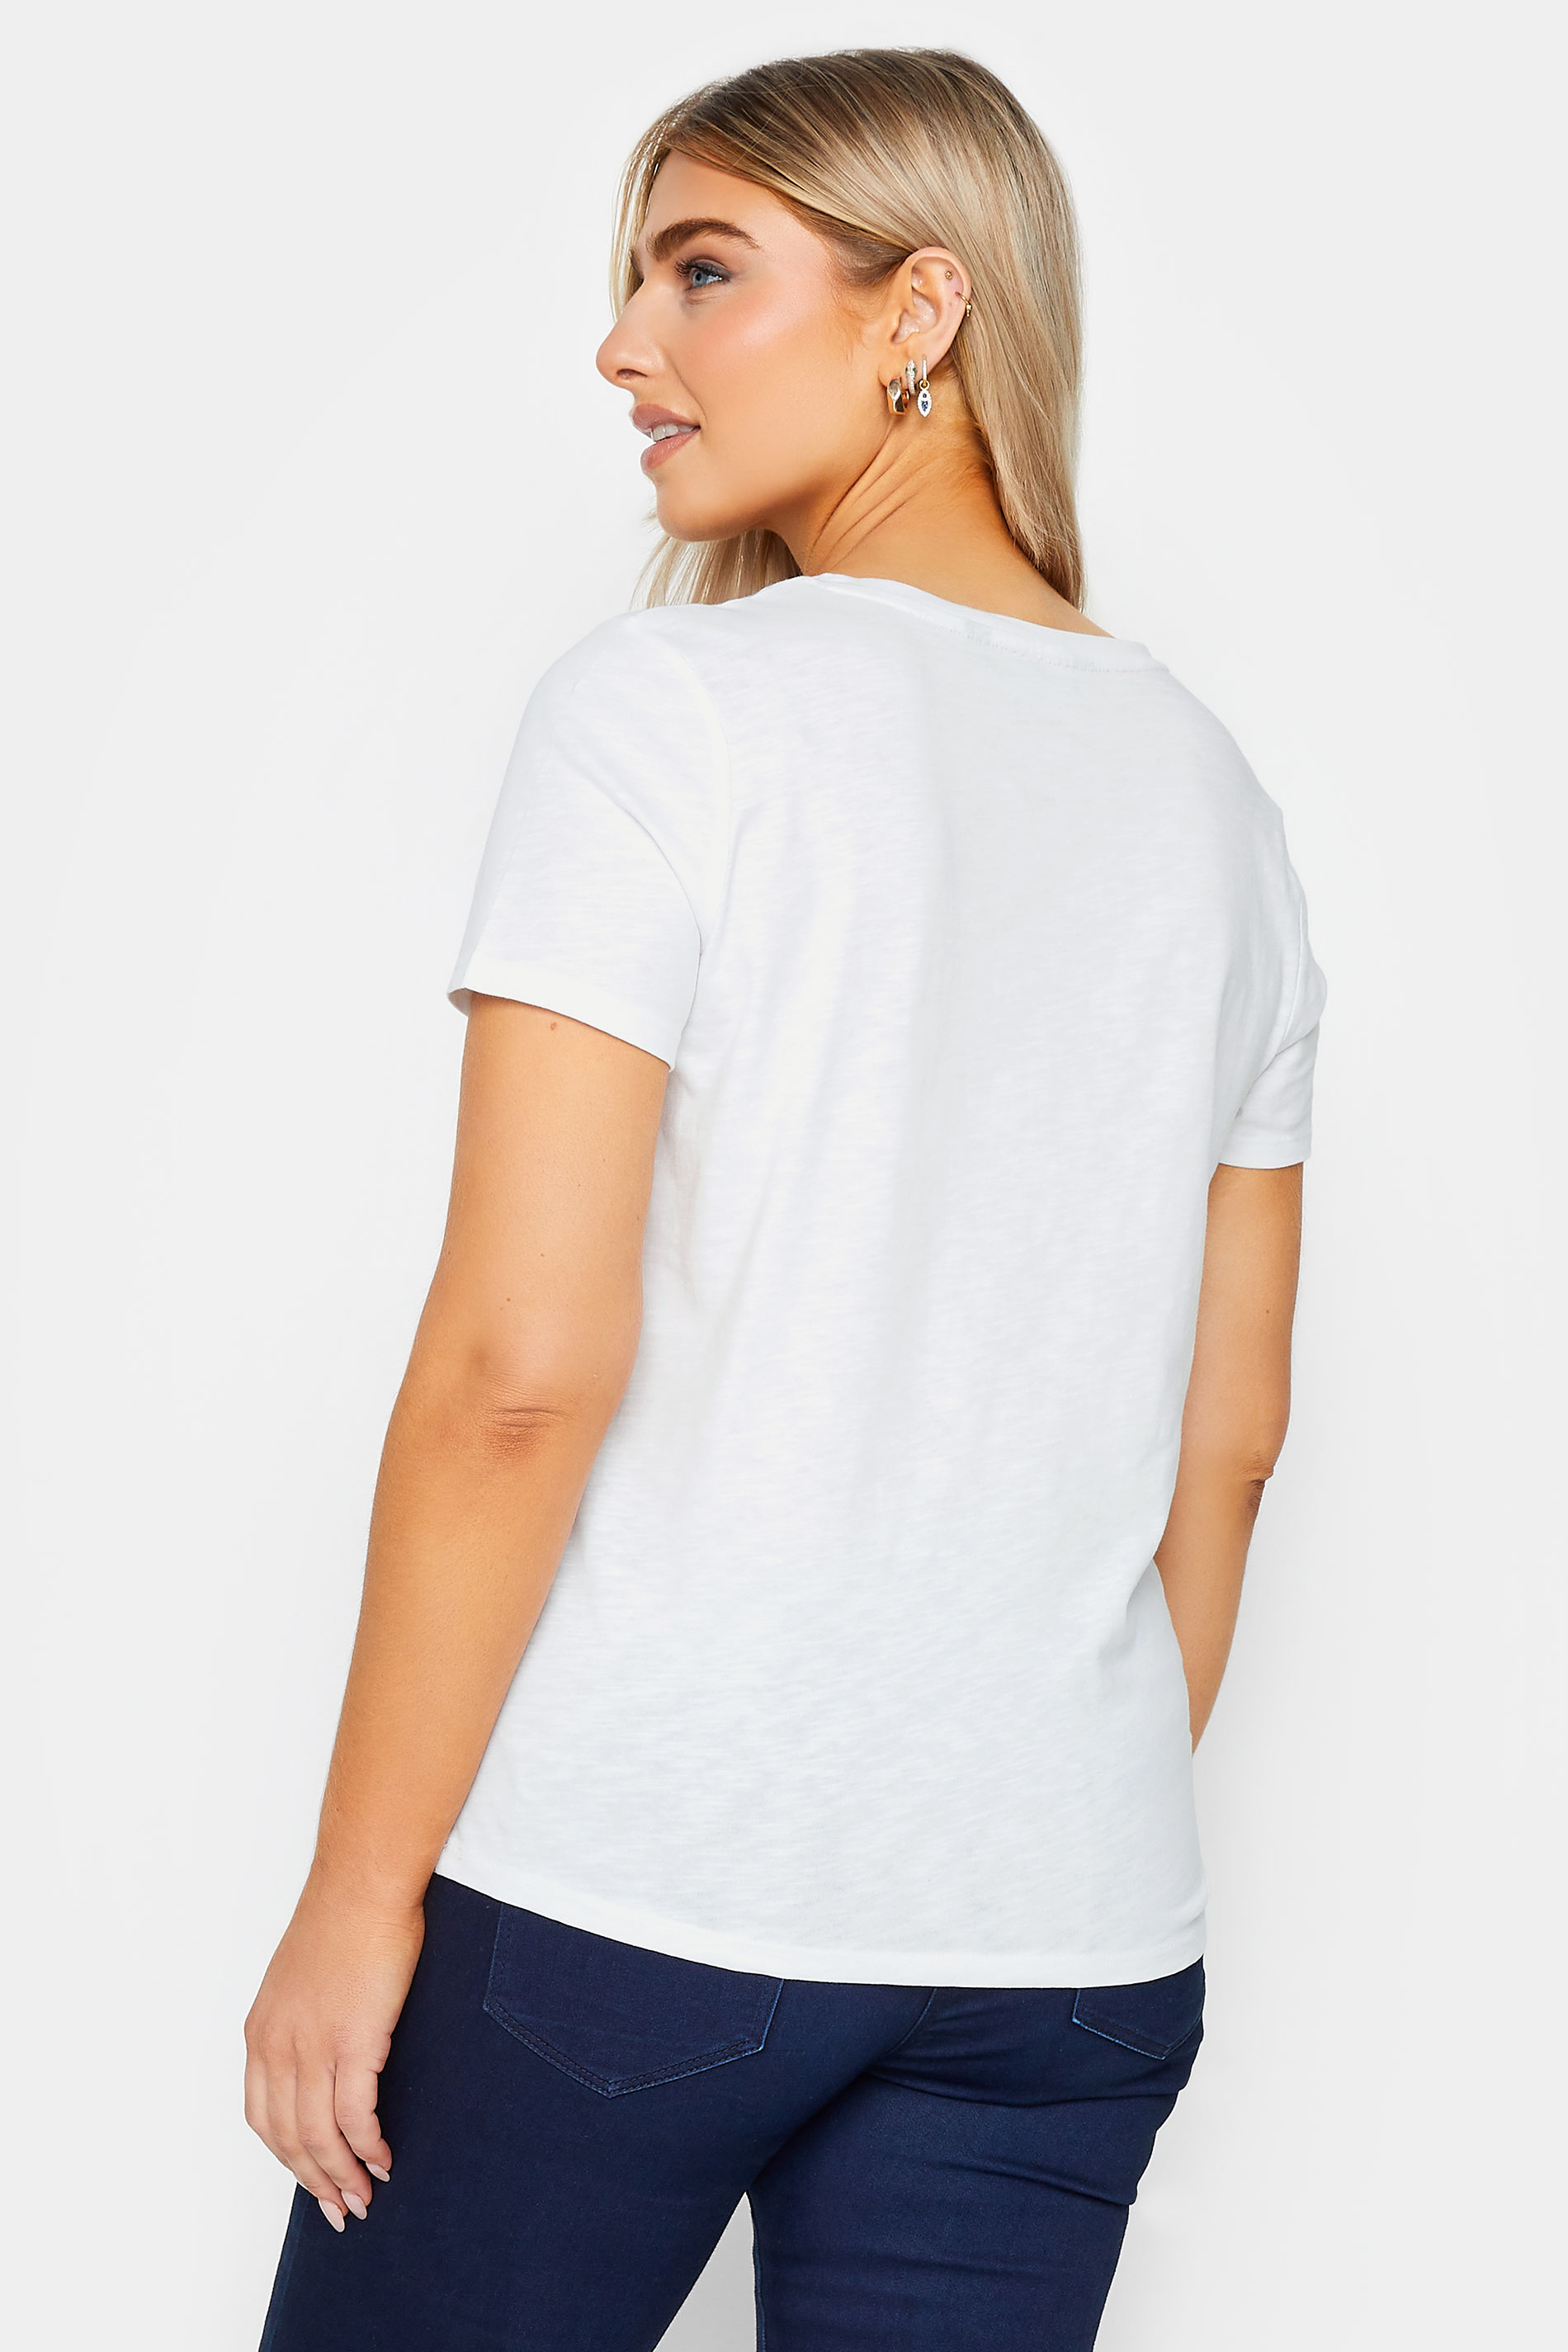 M&Co White V-Neck Cotton T-Shirt | M&Co 3